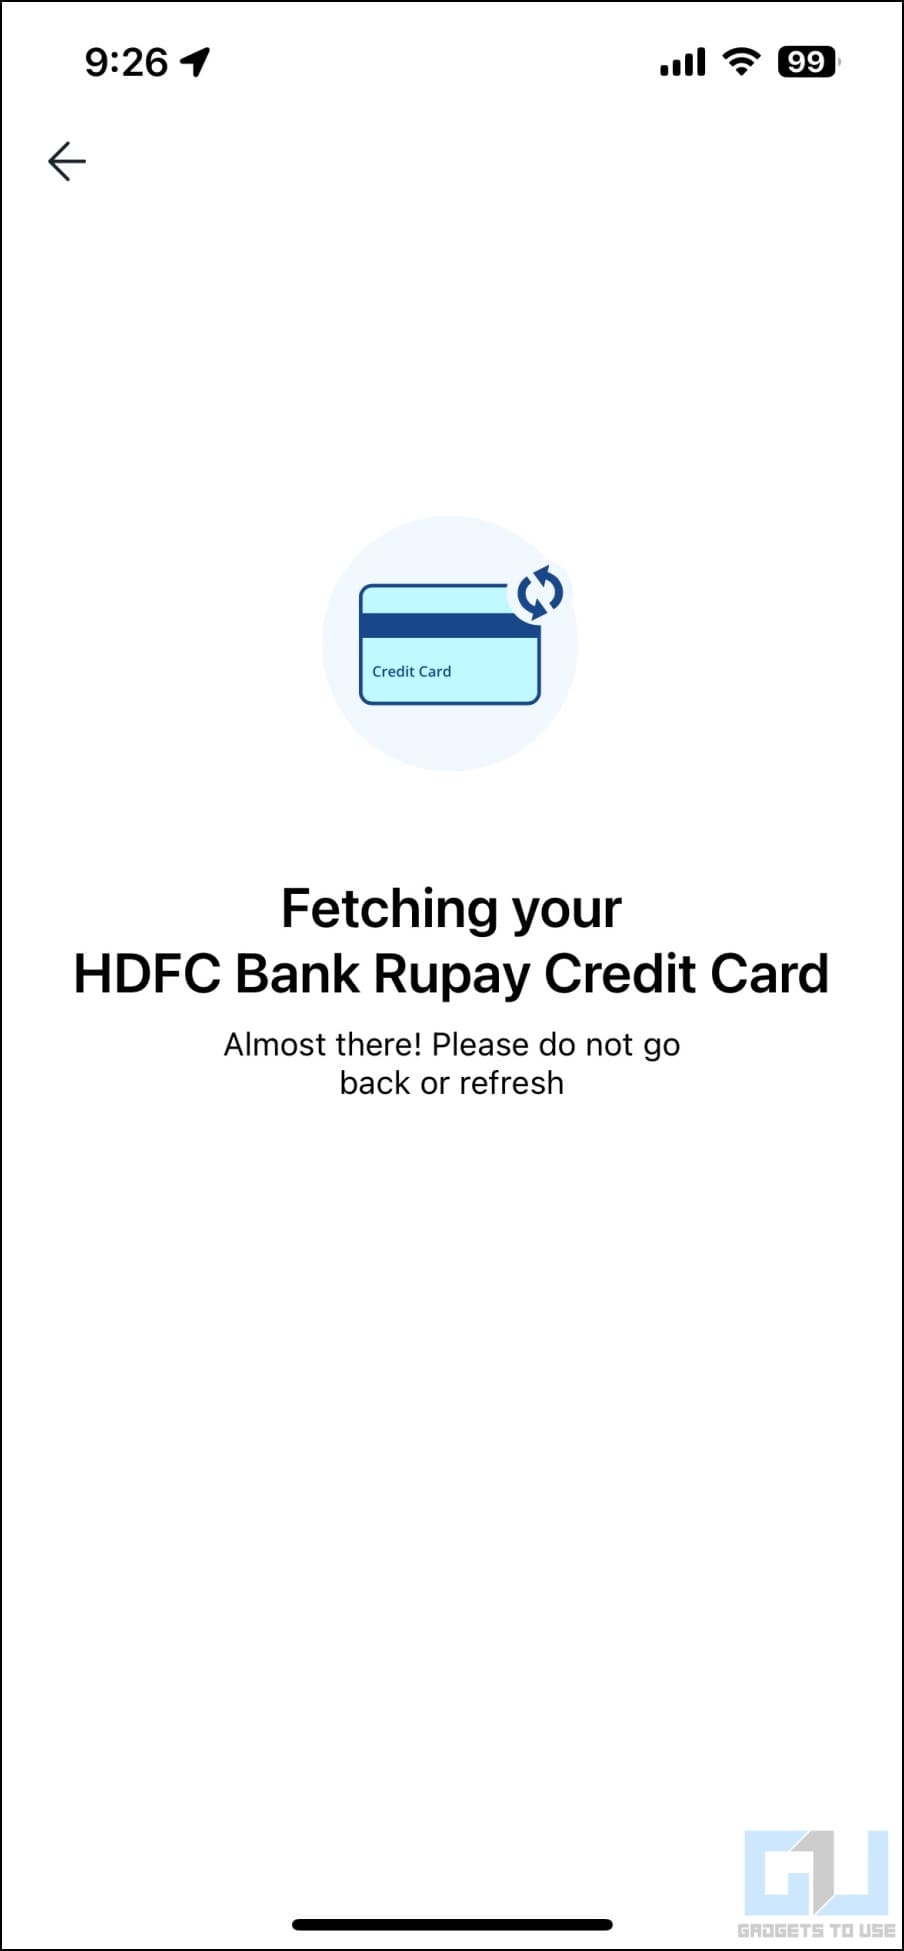 Add Rupay Credit Card to Paytm UPI